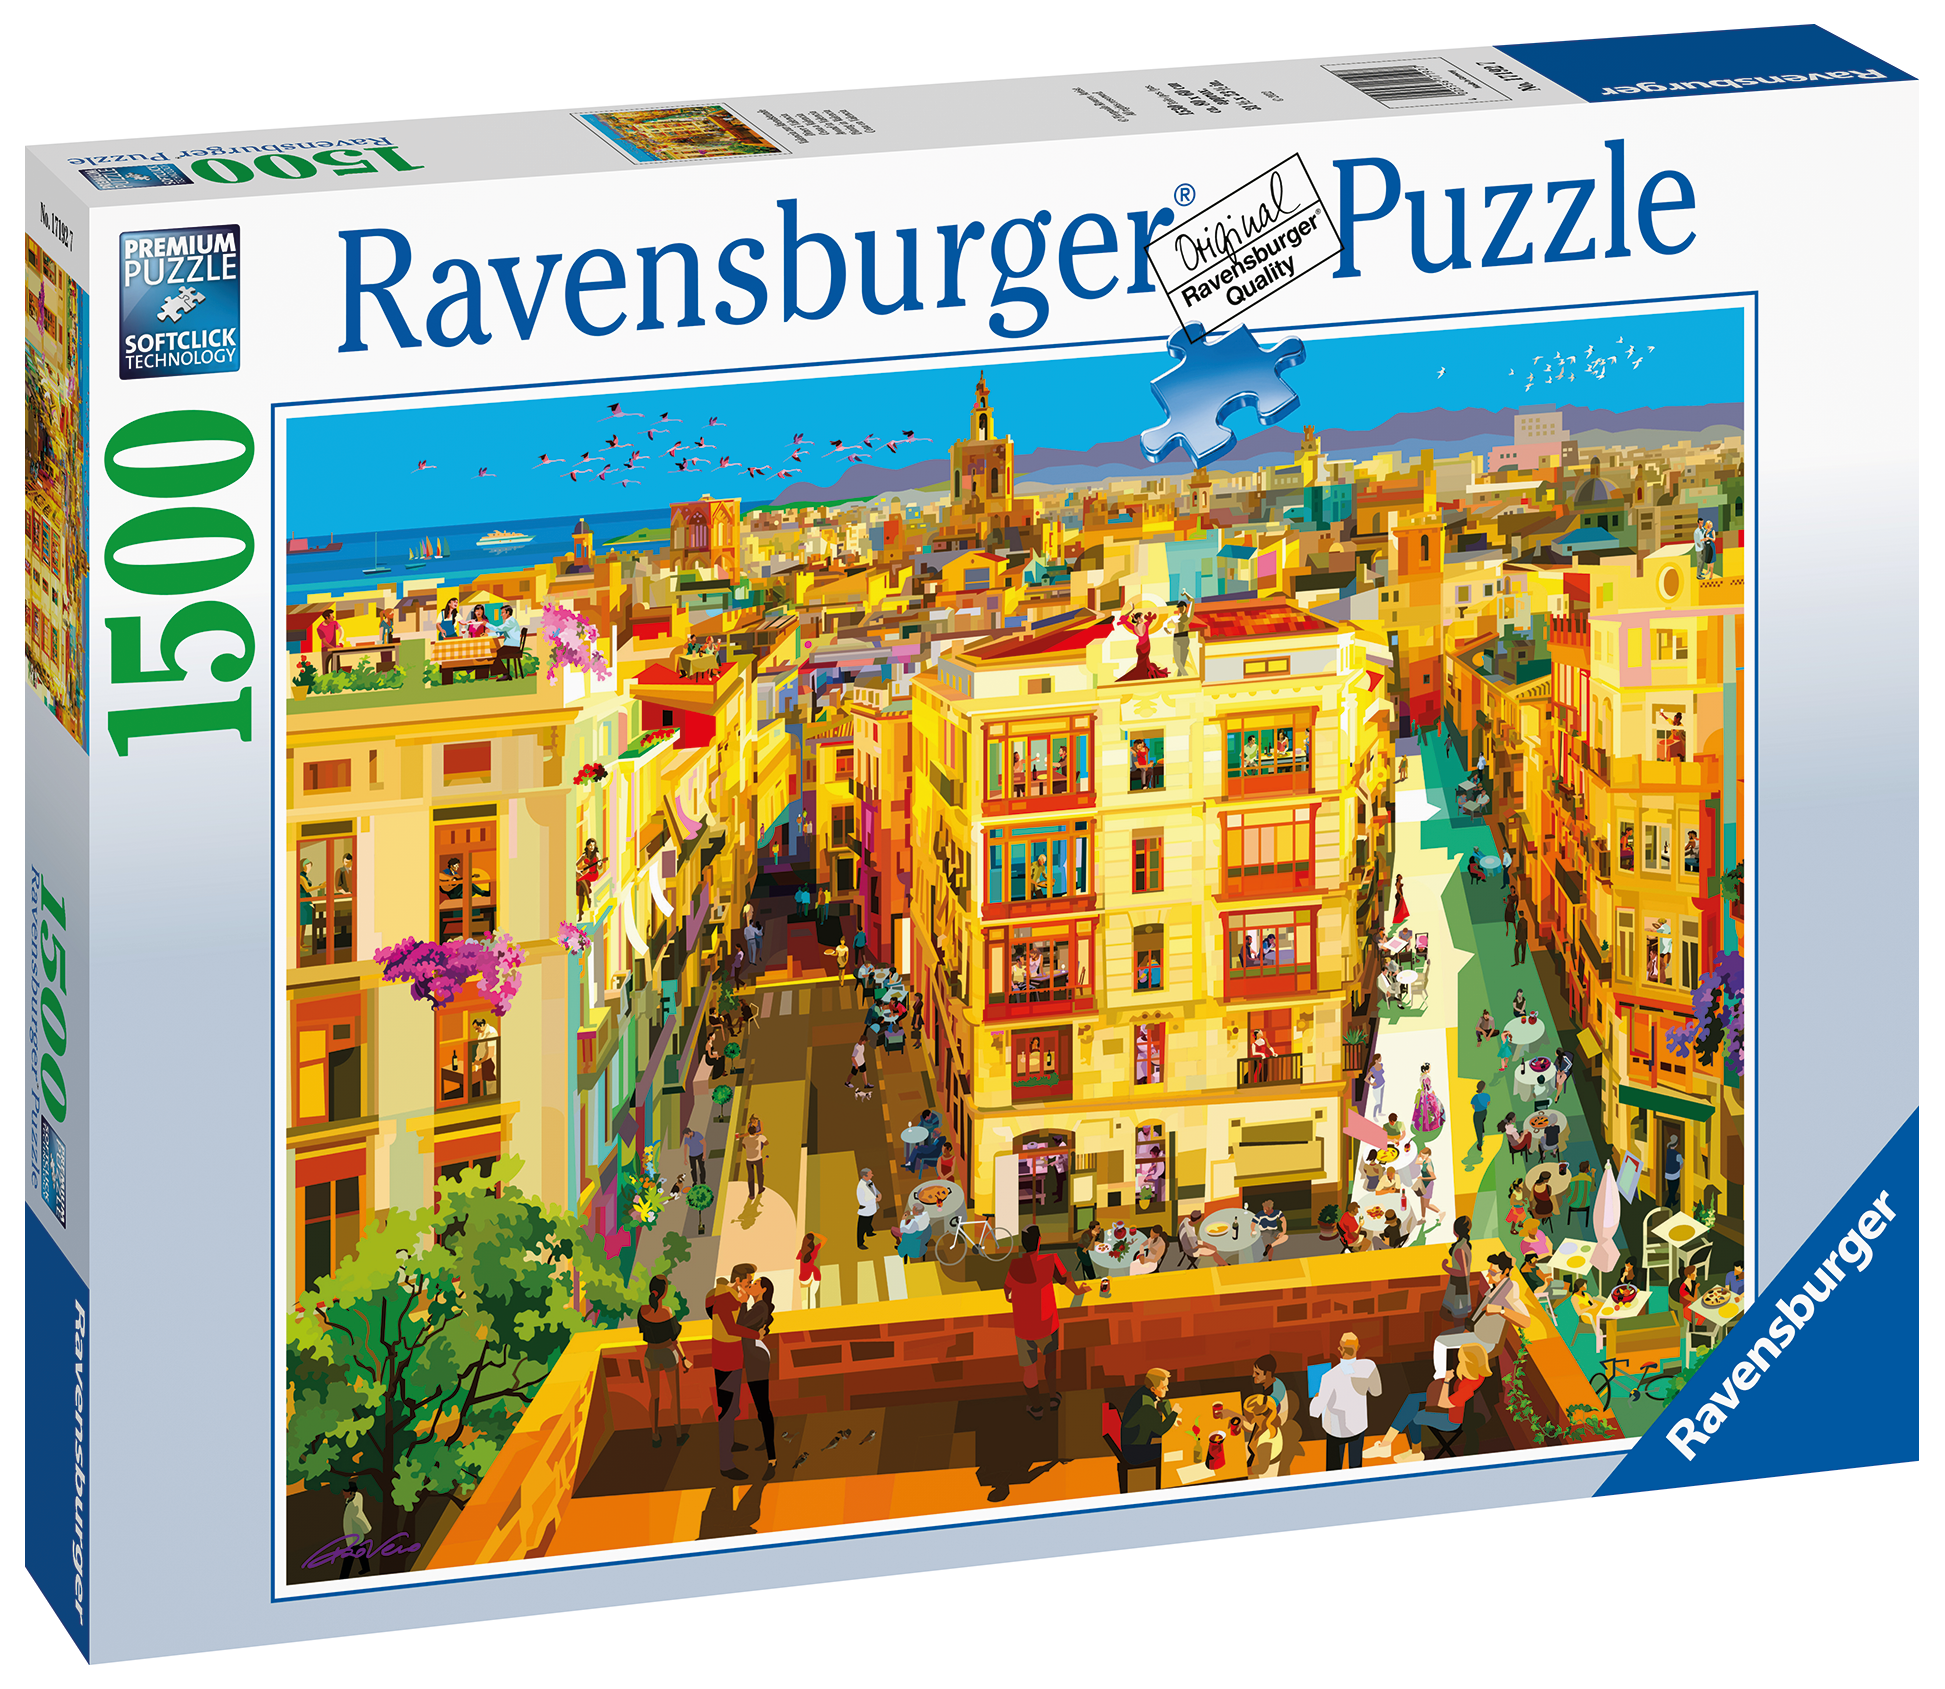 Ravensburger - puzzle cena a valencia, 1500 pezzi, puzzle adulti - RAVENSBURGER